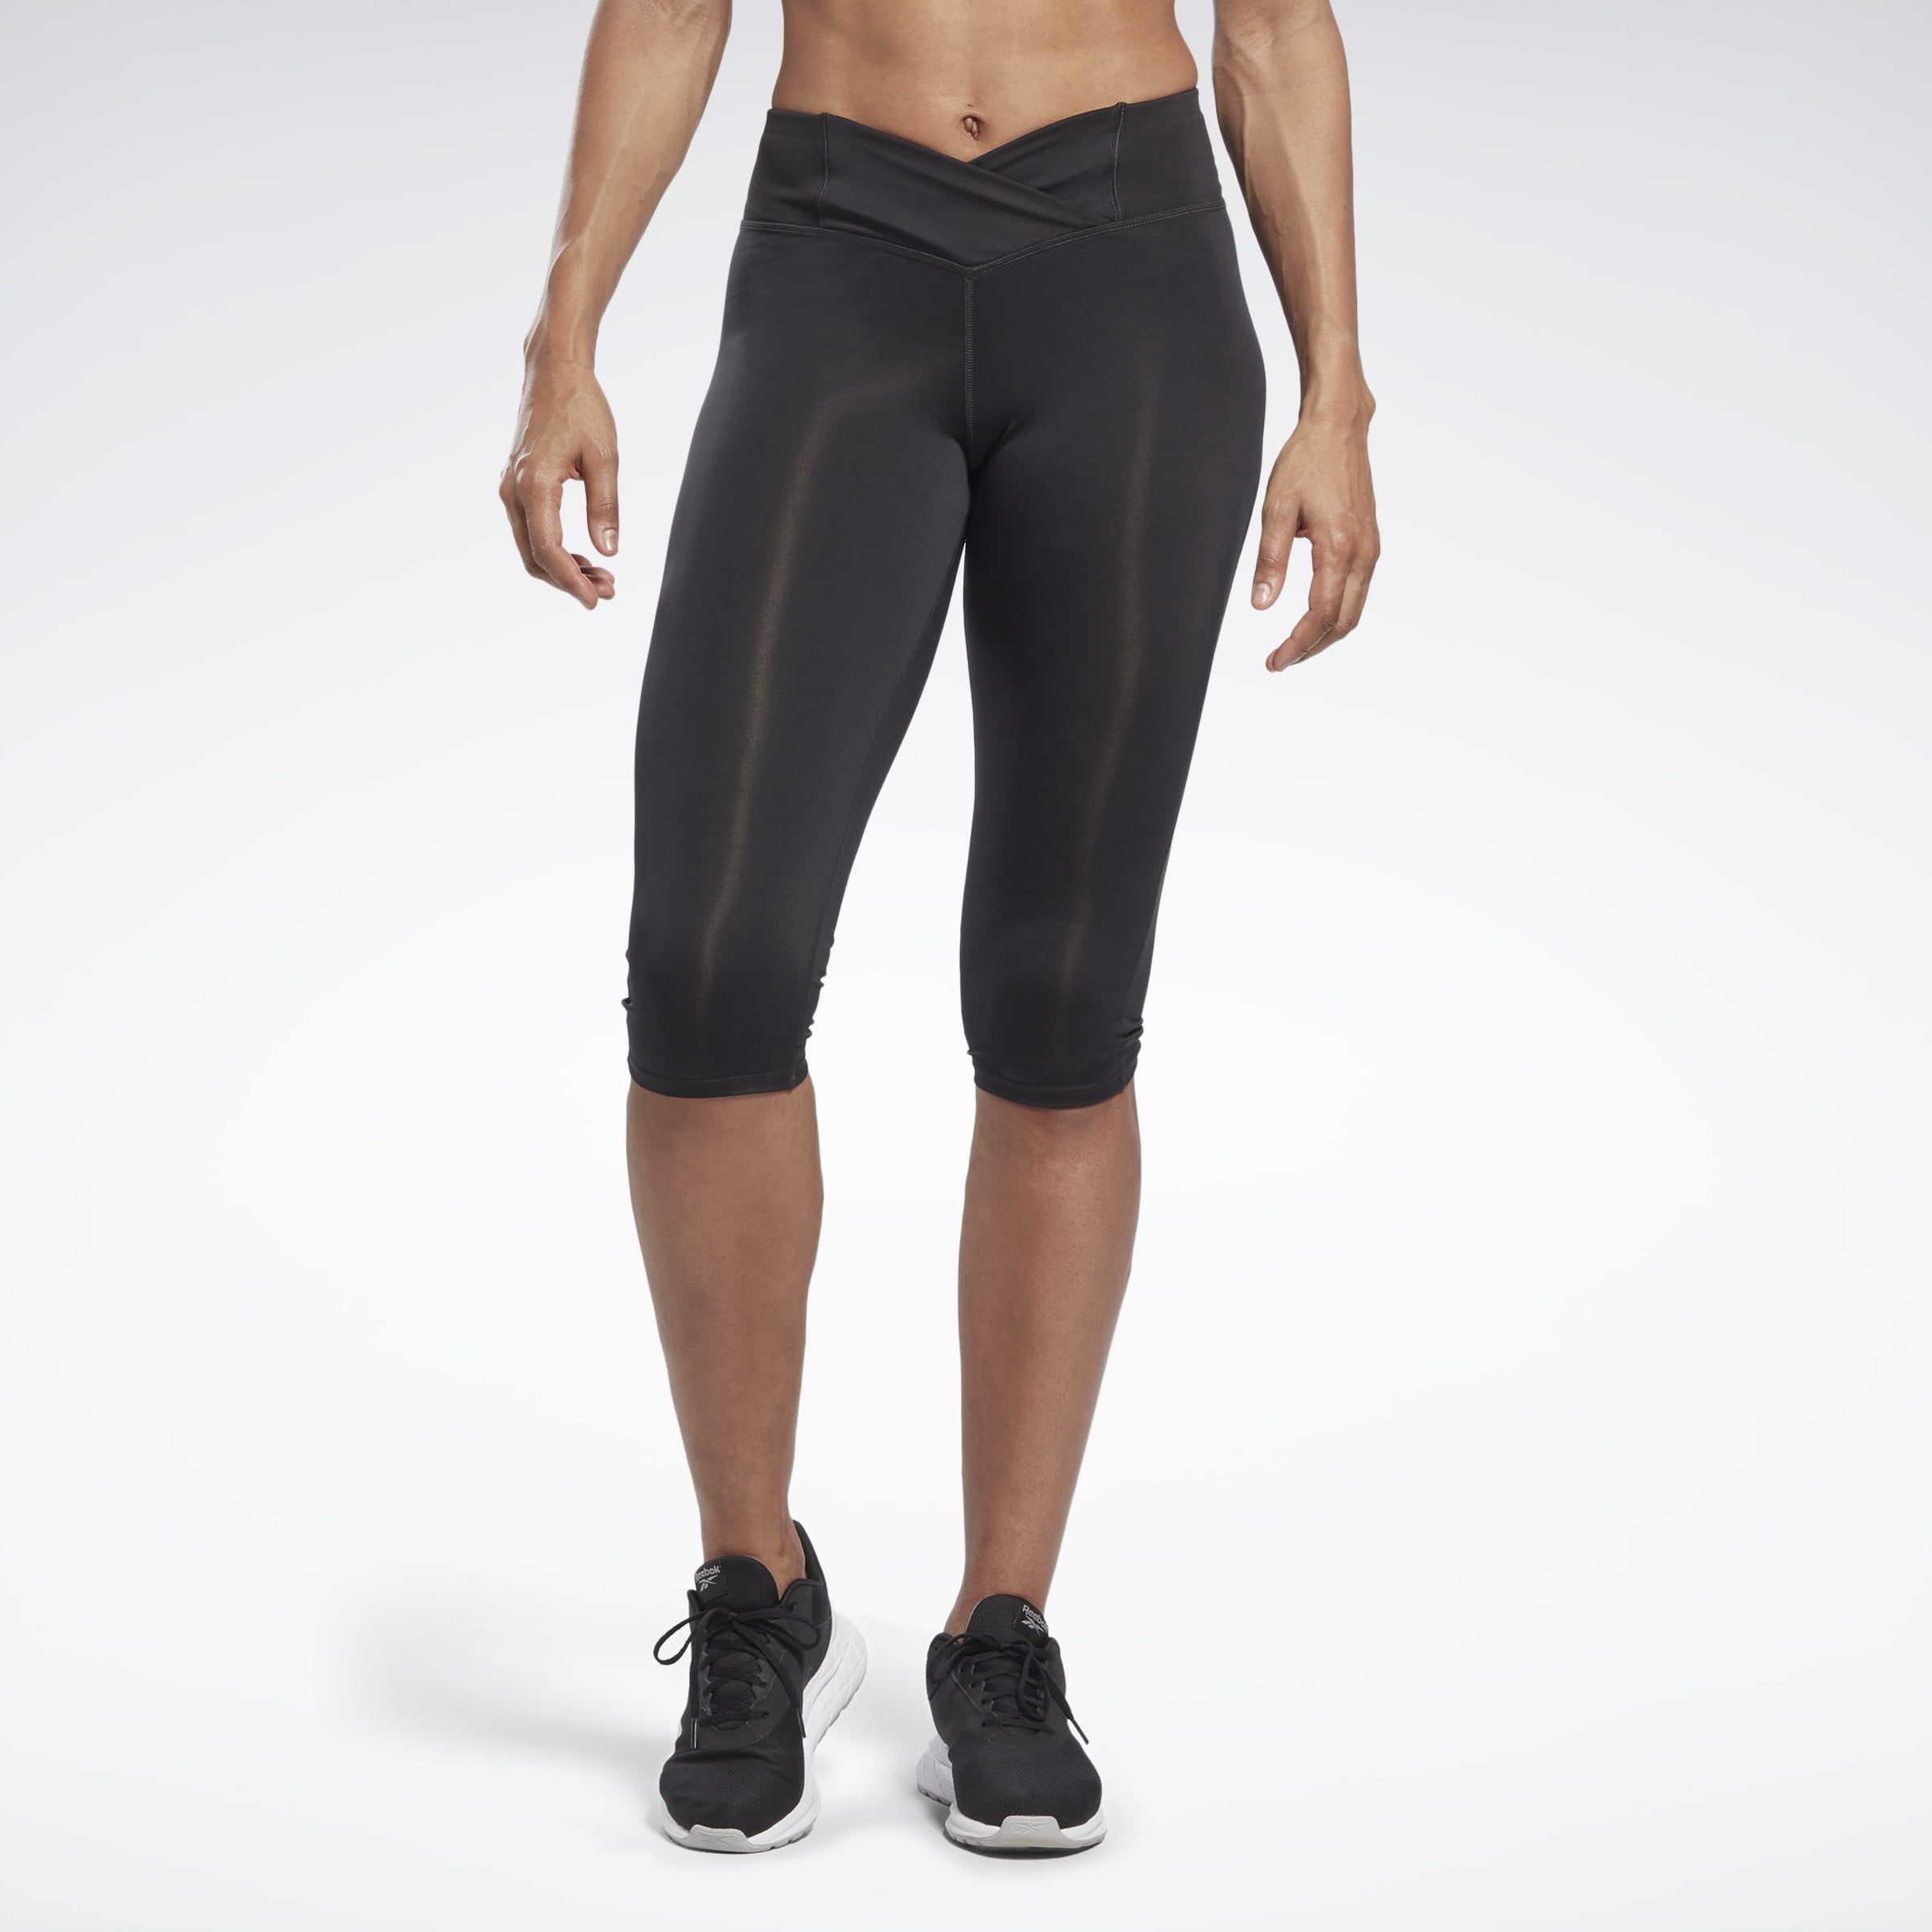 Reebok Women's Workout Ready Basic Tights Walmart.com